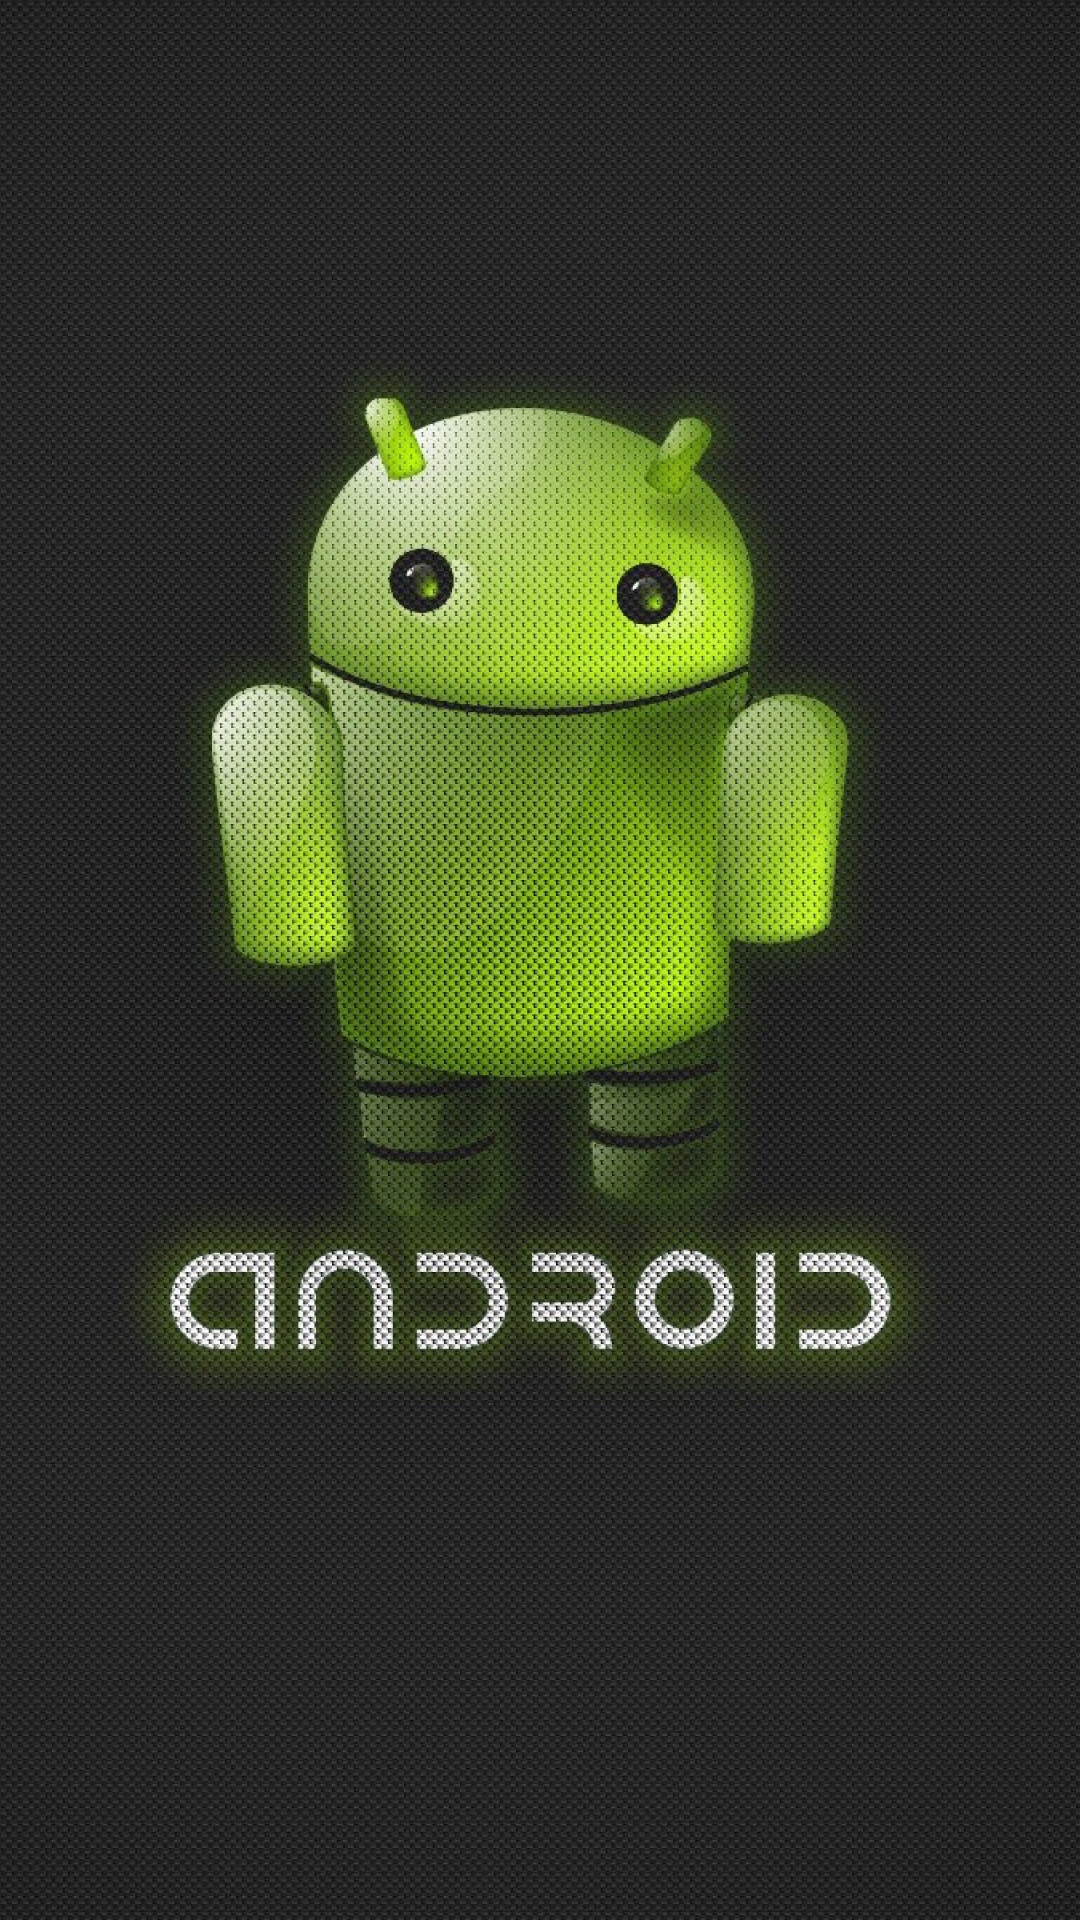 Android 5.0 Lollipop wallpaper 1080x1920